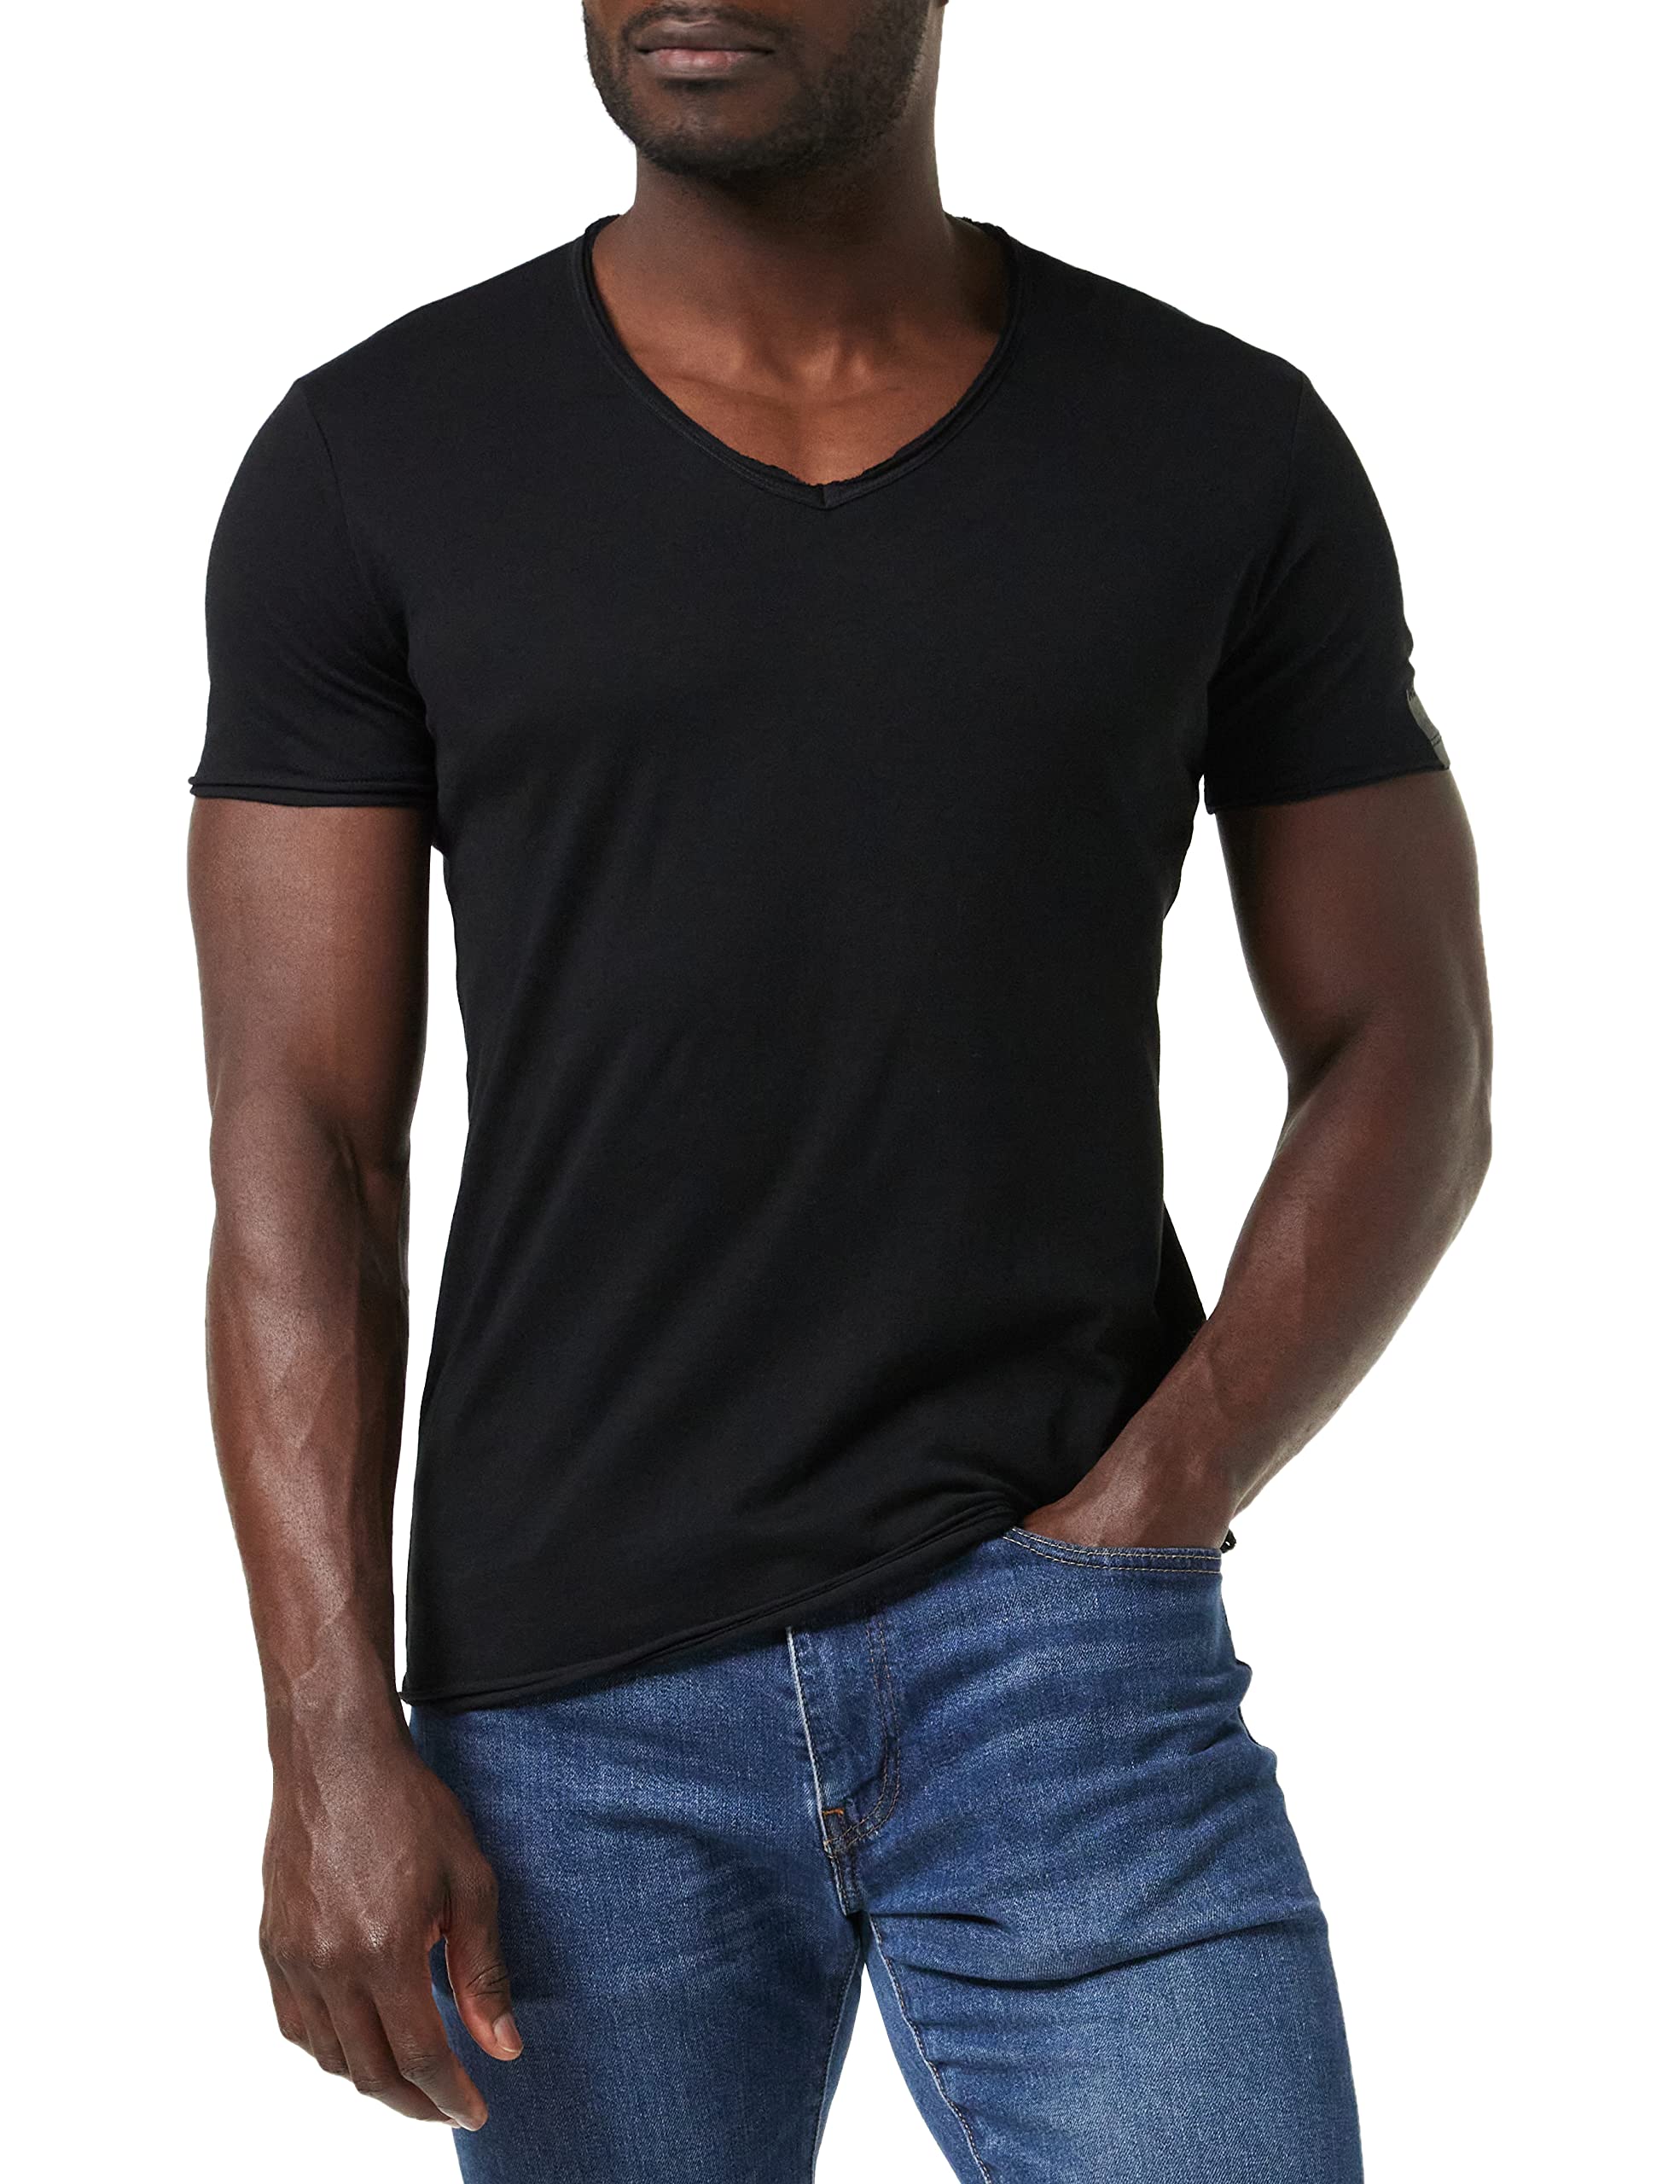 Replay Herren T-Shirt Kurzarm mit V-Ausschnitt, Black 098 (Schwarz), XL